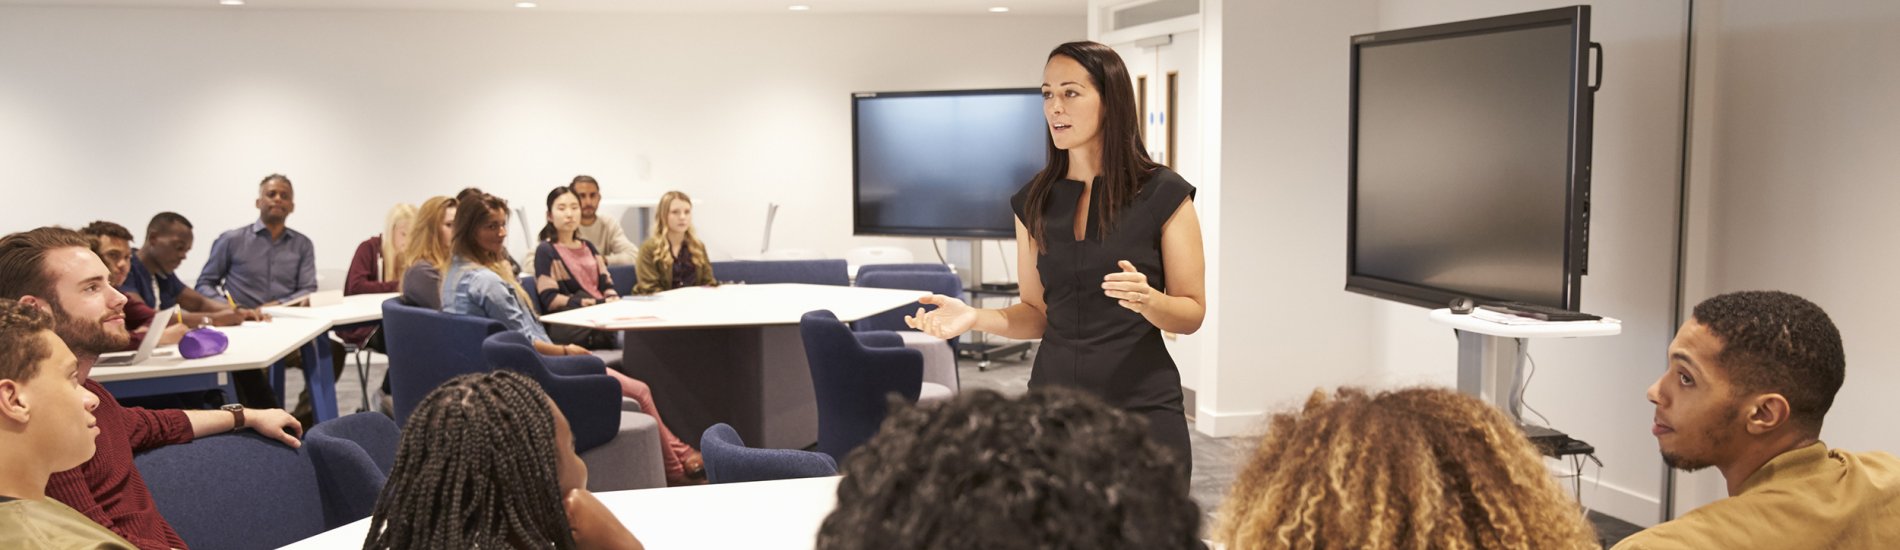 Female teacher addressing university students in a classroom 